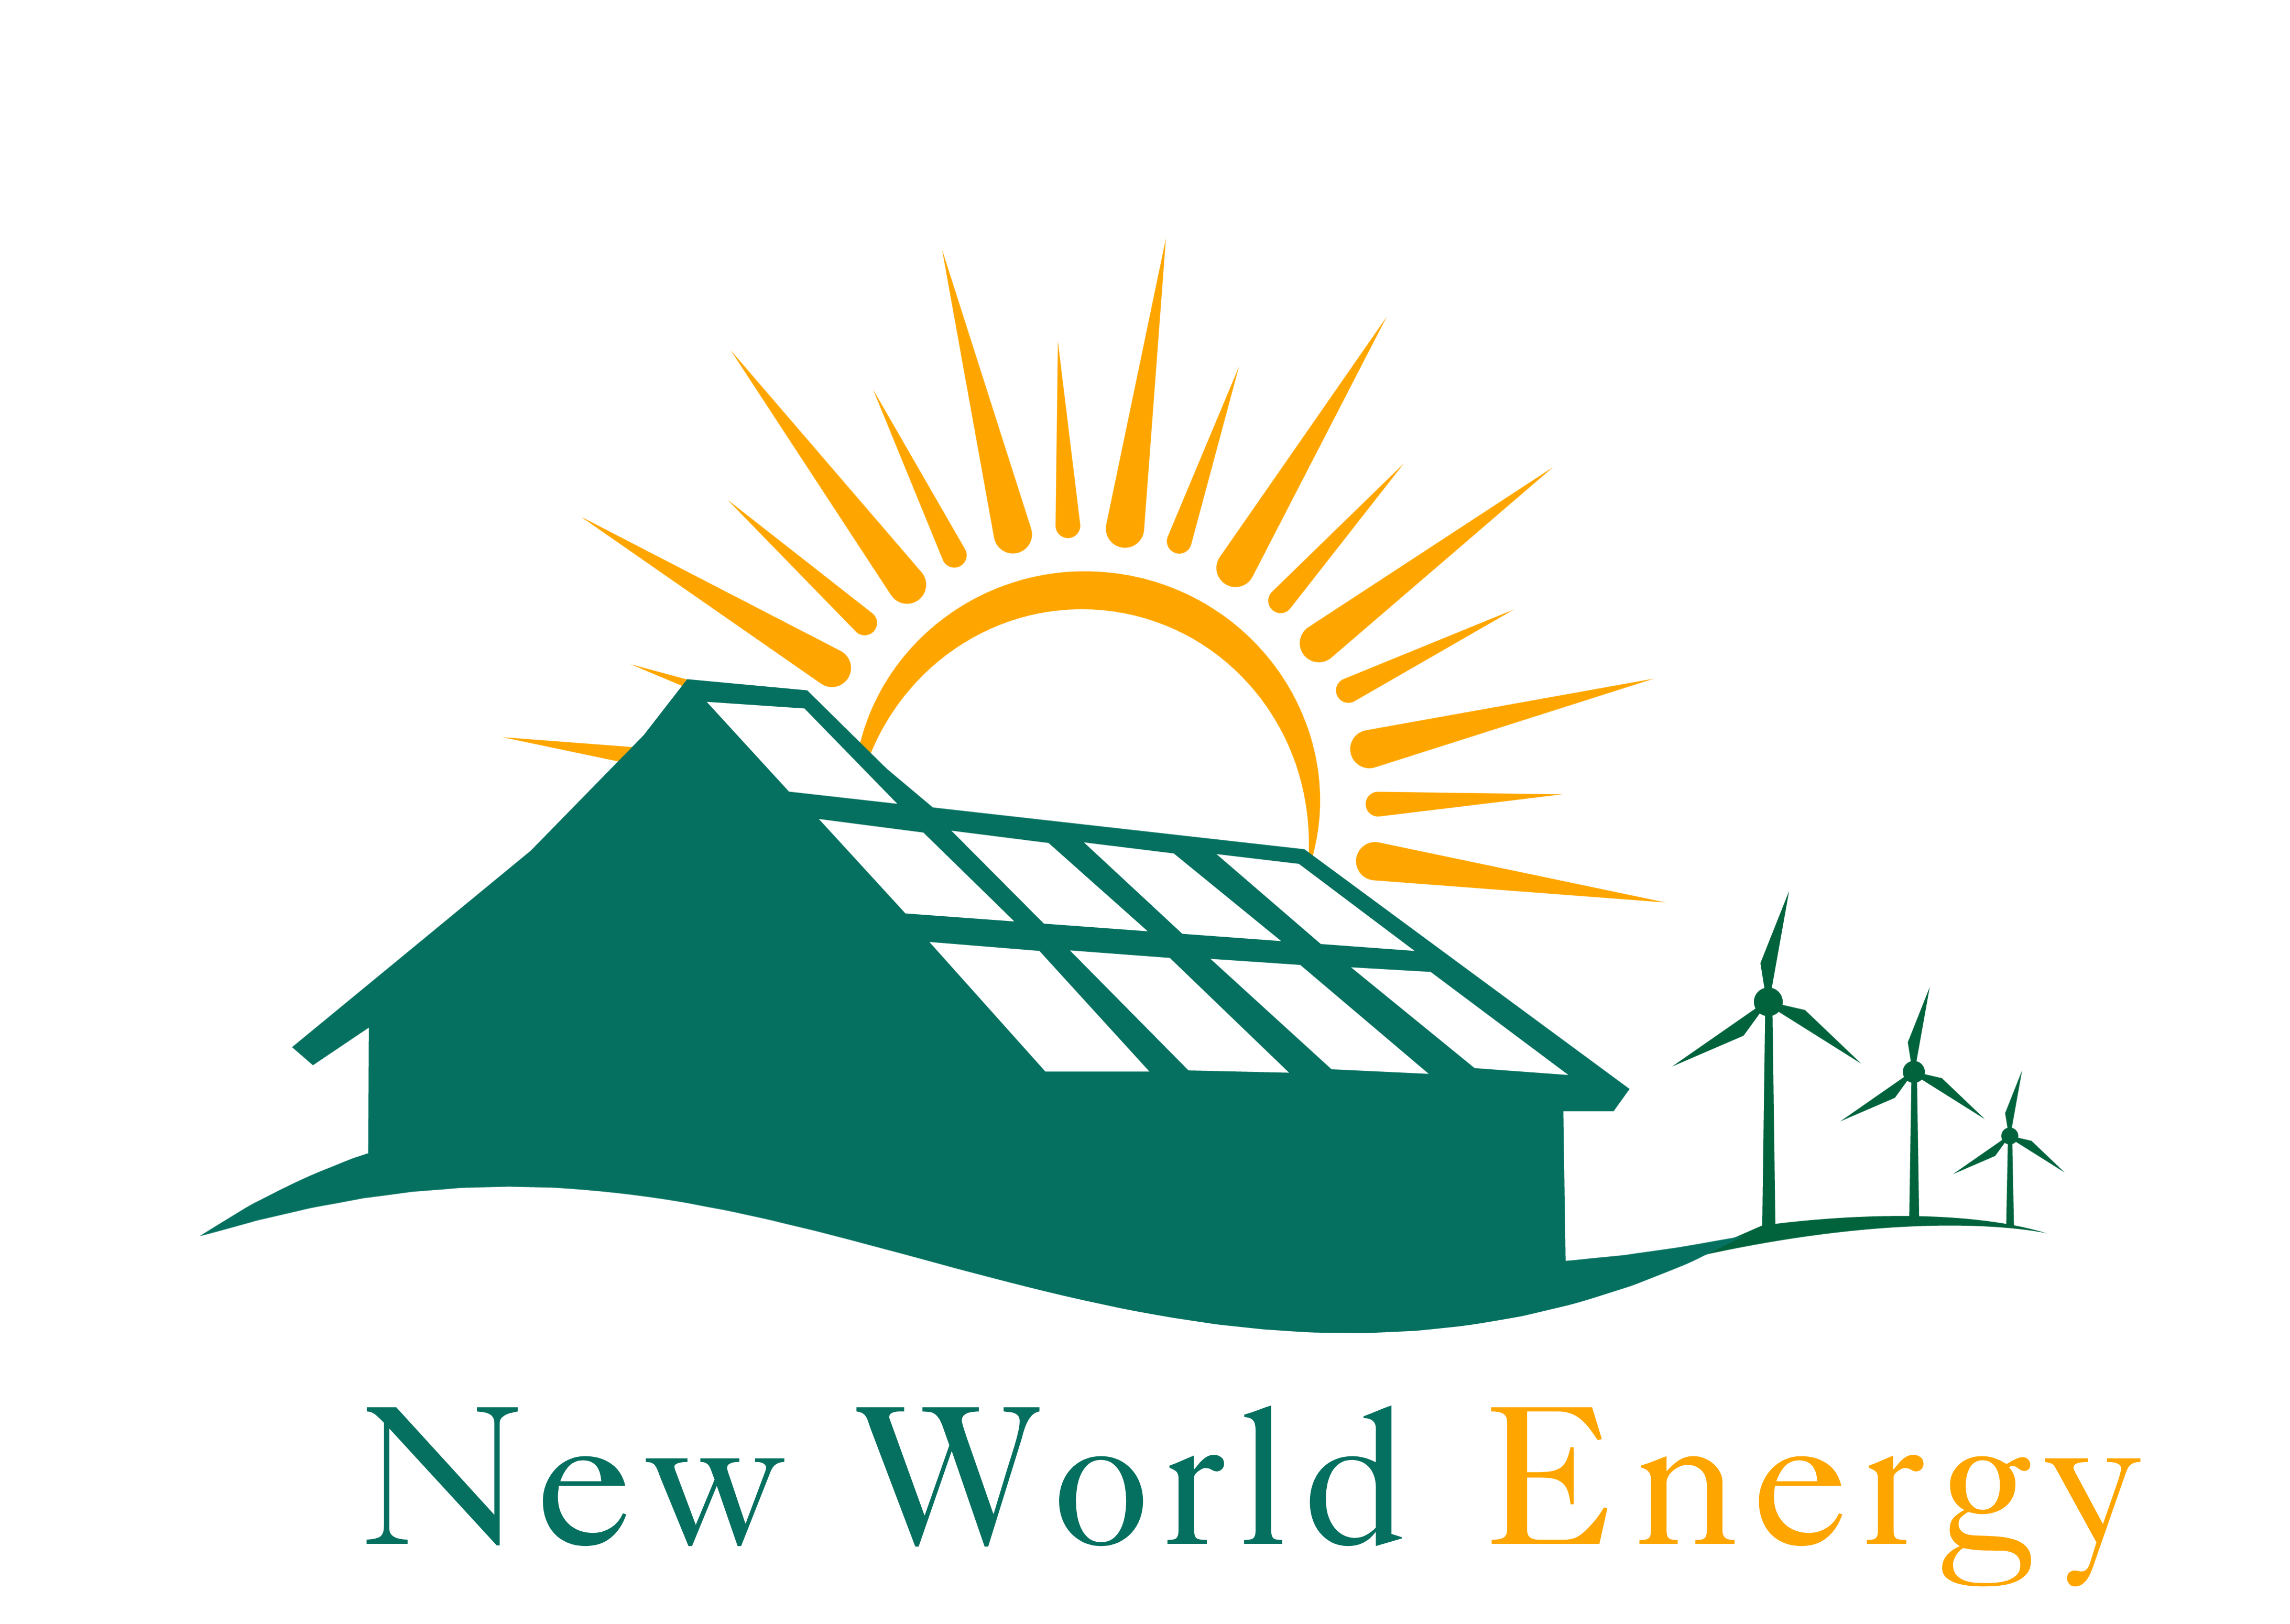 NEW WORLD ENERGY